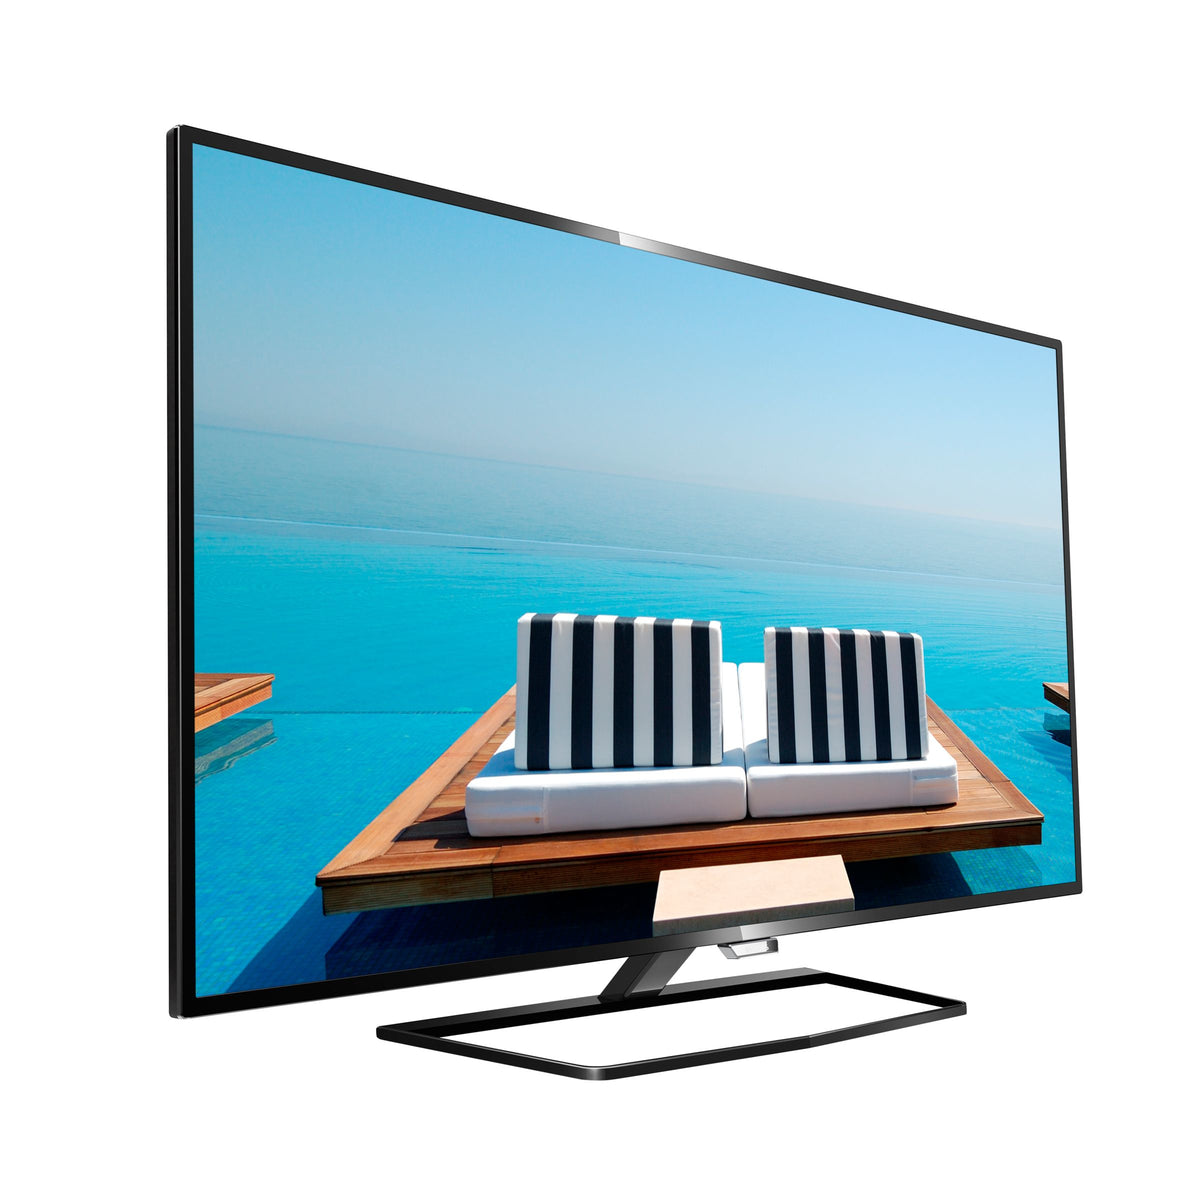 Philips 48HFL5010T - 48" Classe Diagonal Professional MediaSuite TV LCD com luz de fundo LED - hotel / hospitalidade - Smart TV - 1080p 1920 x 1080 - preto